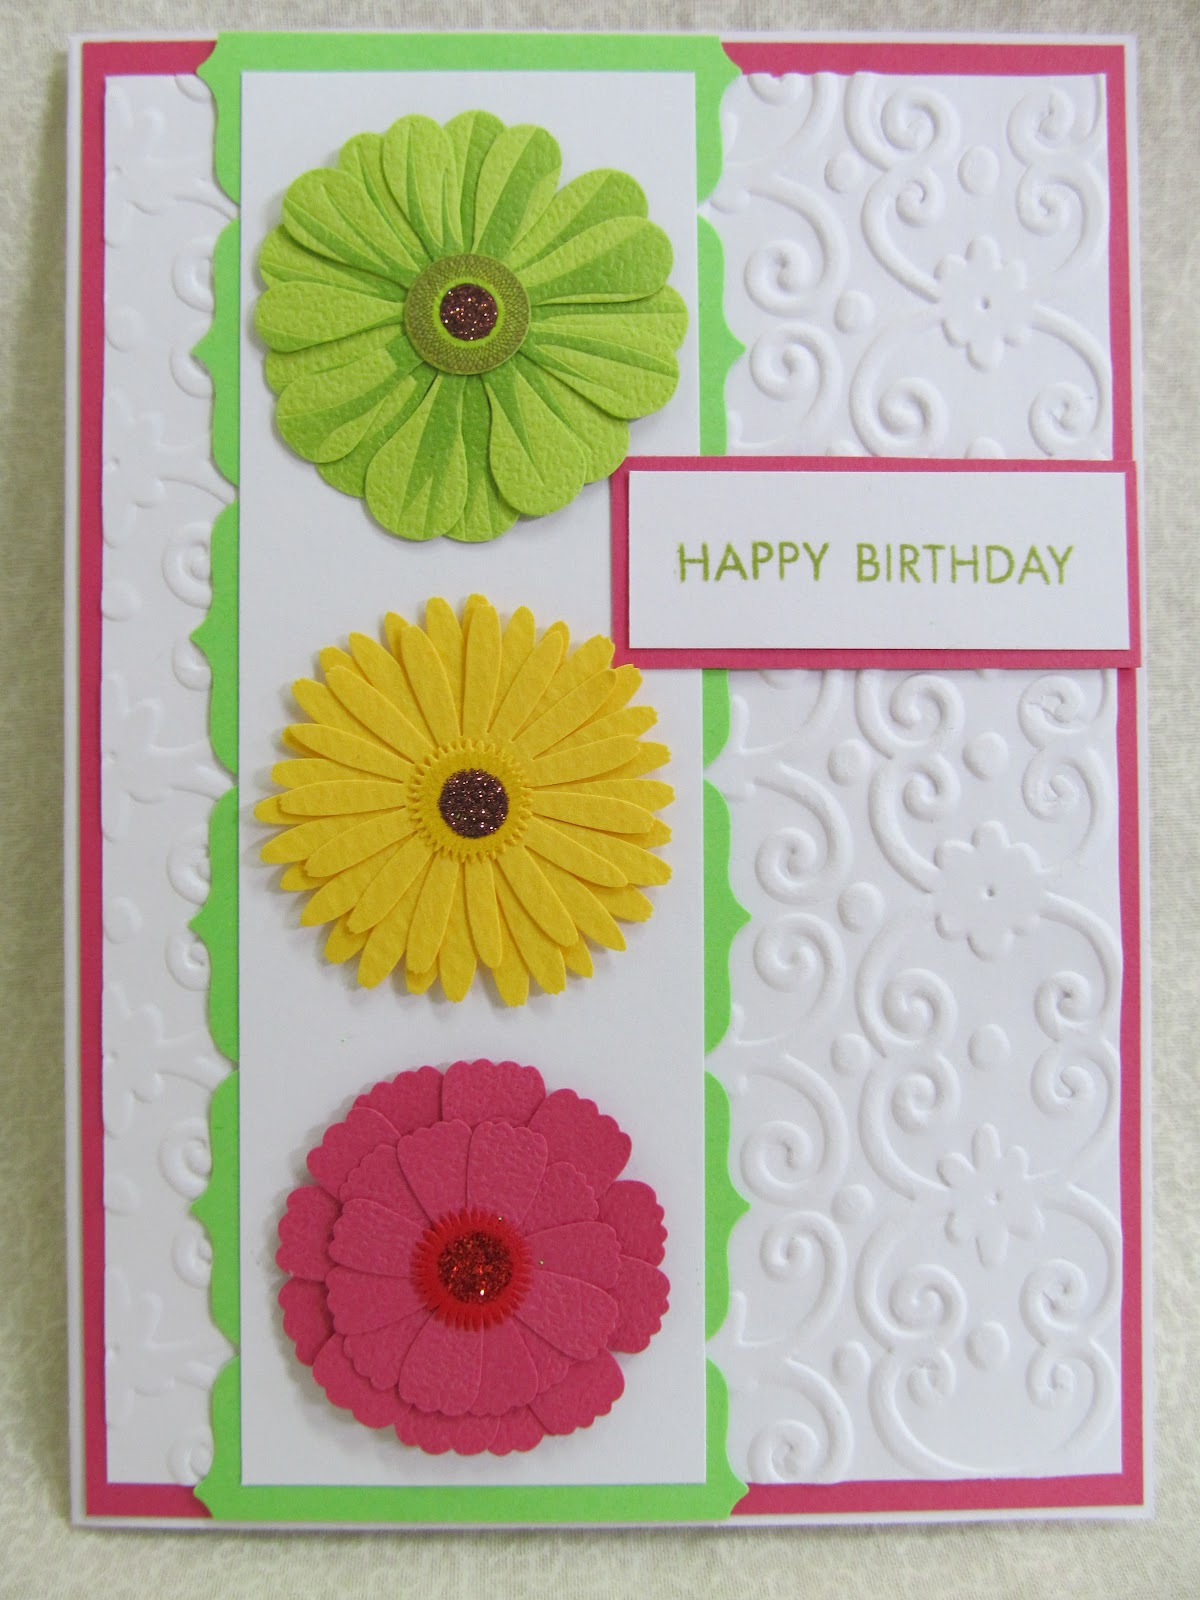 Handmade Birthday Invitation Cards Ideas Simple And Cute Handmade Birthday Cards Cute Greeting Cards Bright